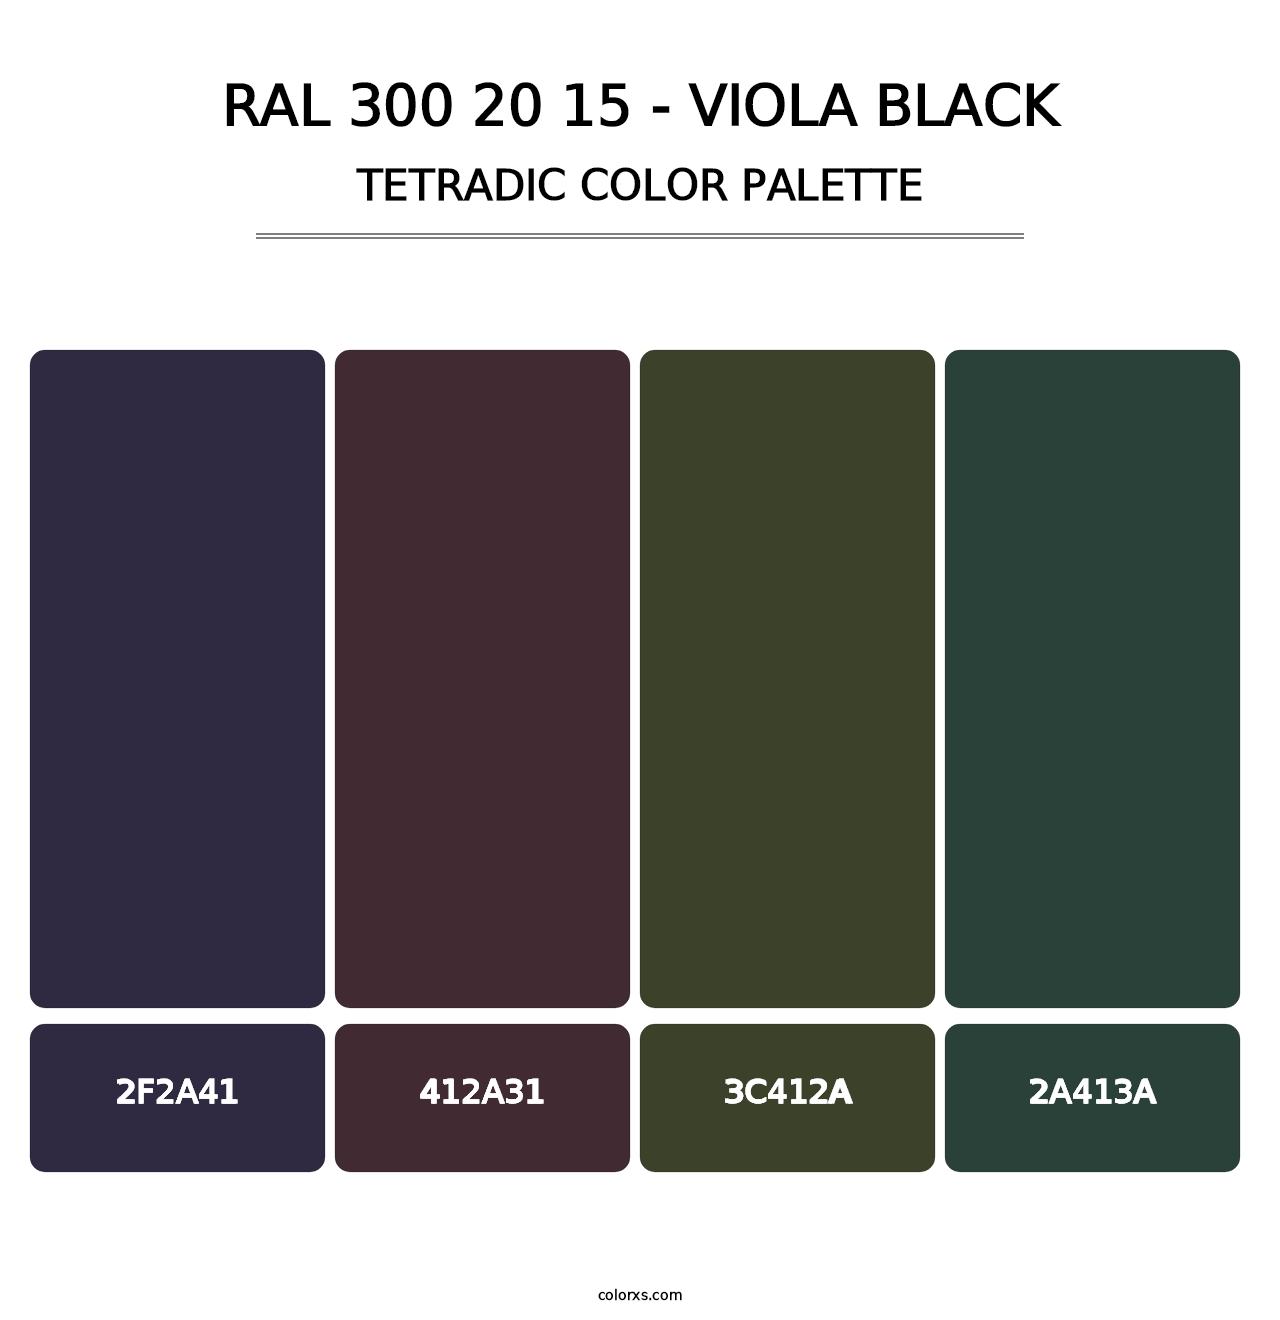 RAL 300 20 15 - Viola Black - Tetradic Color Palette